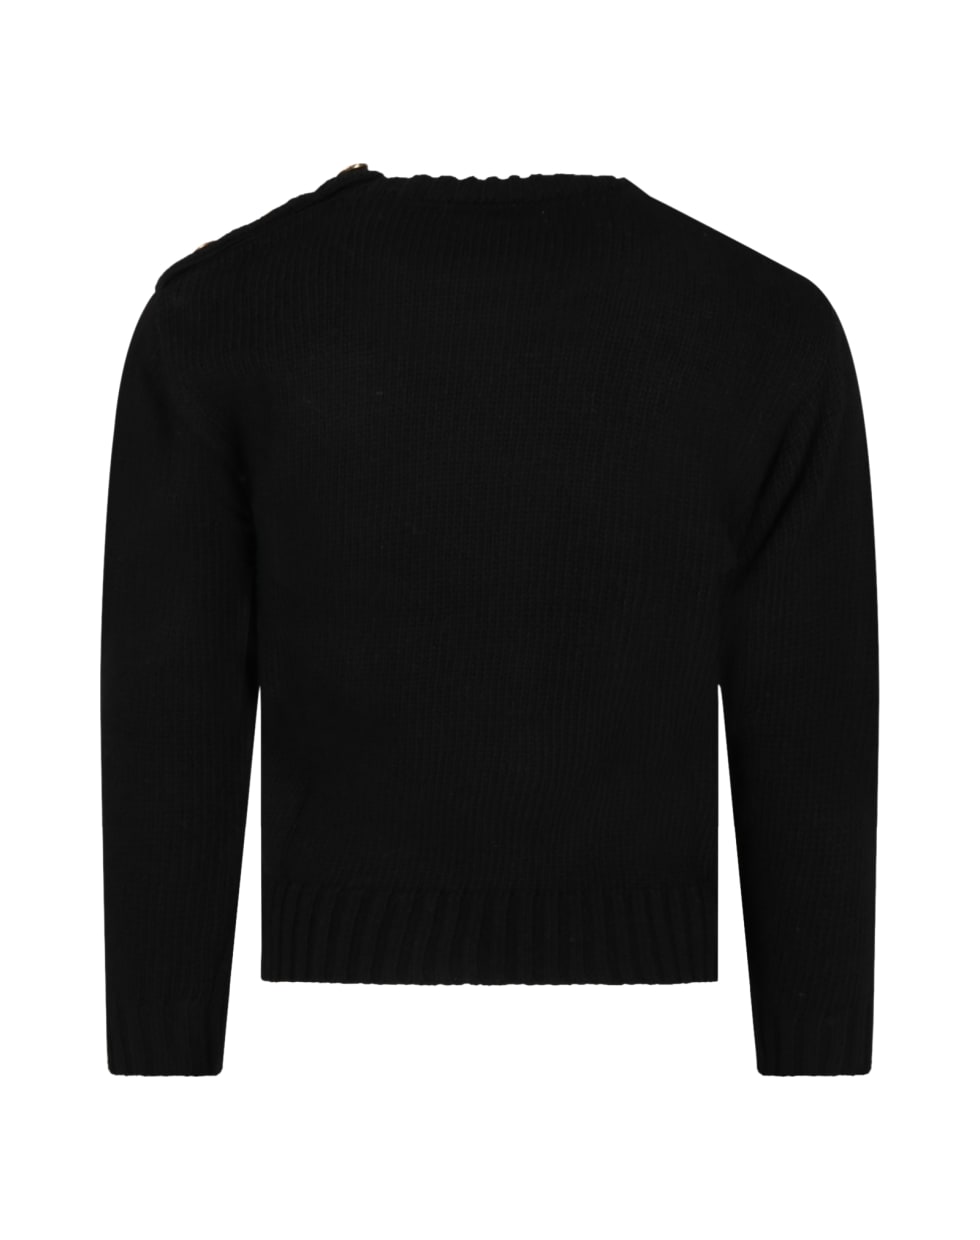 Philosophy di Lorenzo Serafini Kids Black Sweater For Girl With Logo